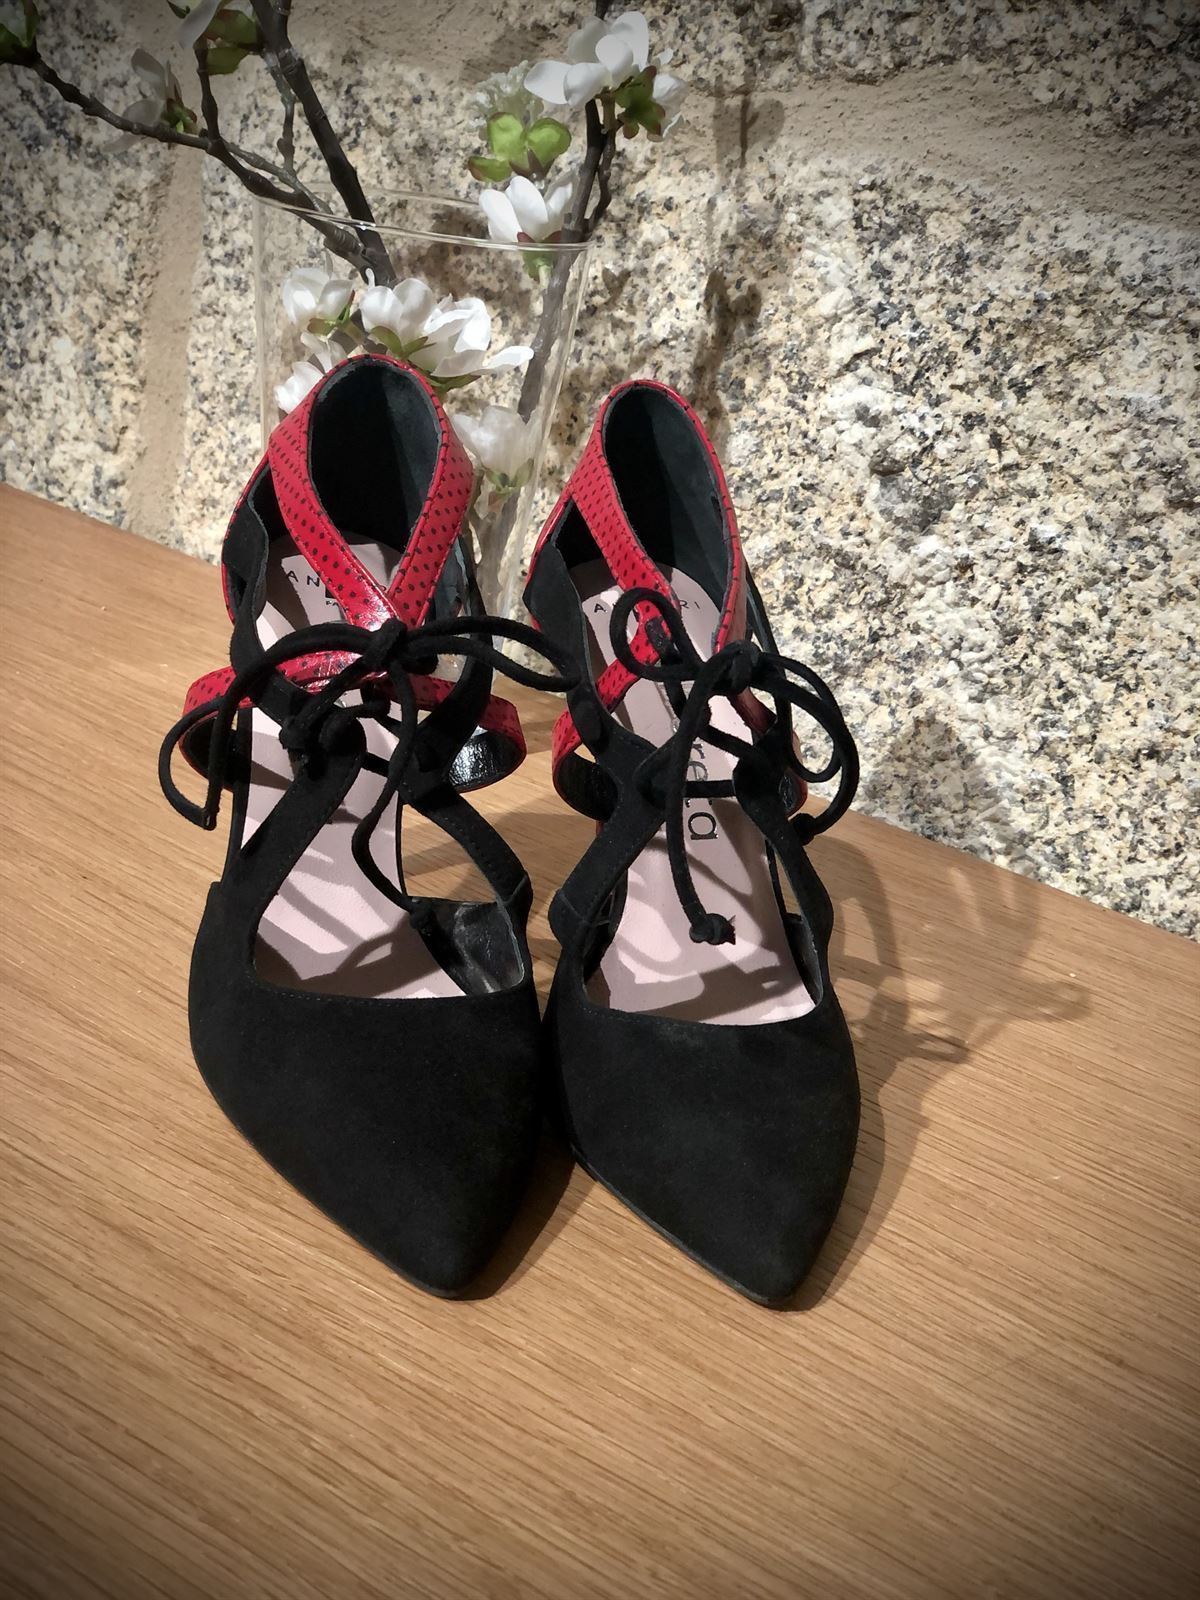 Zapato angari cordones negro rojo - Imagen 2